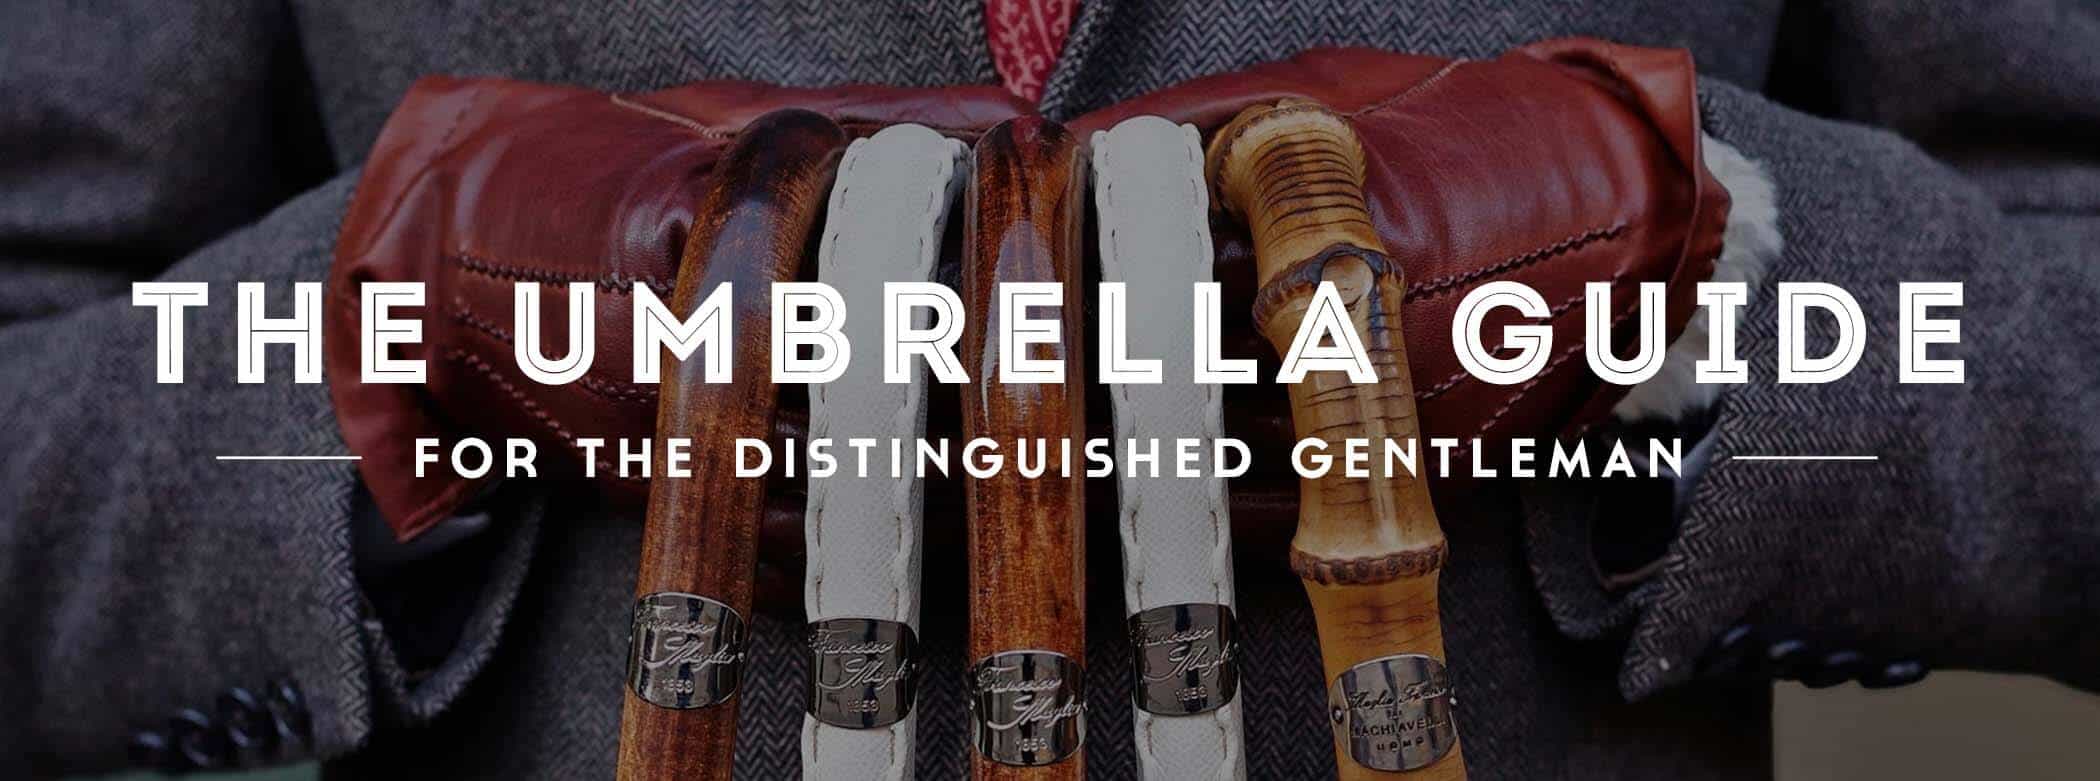 Male Use Straight Umbrella with Hook Handle - China Umbrella and Rain  Umbrella price